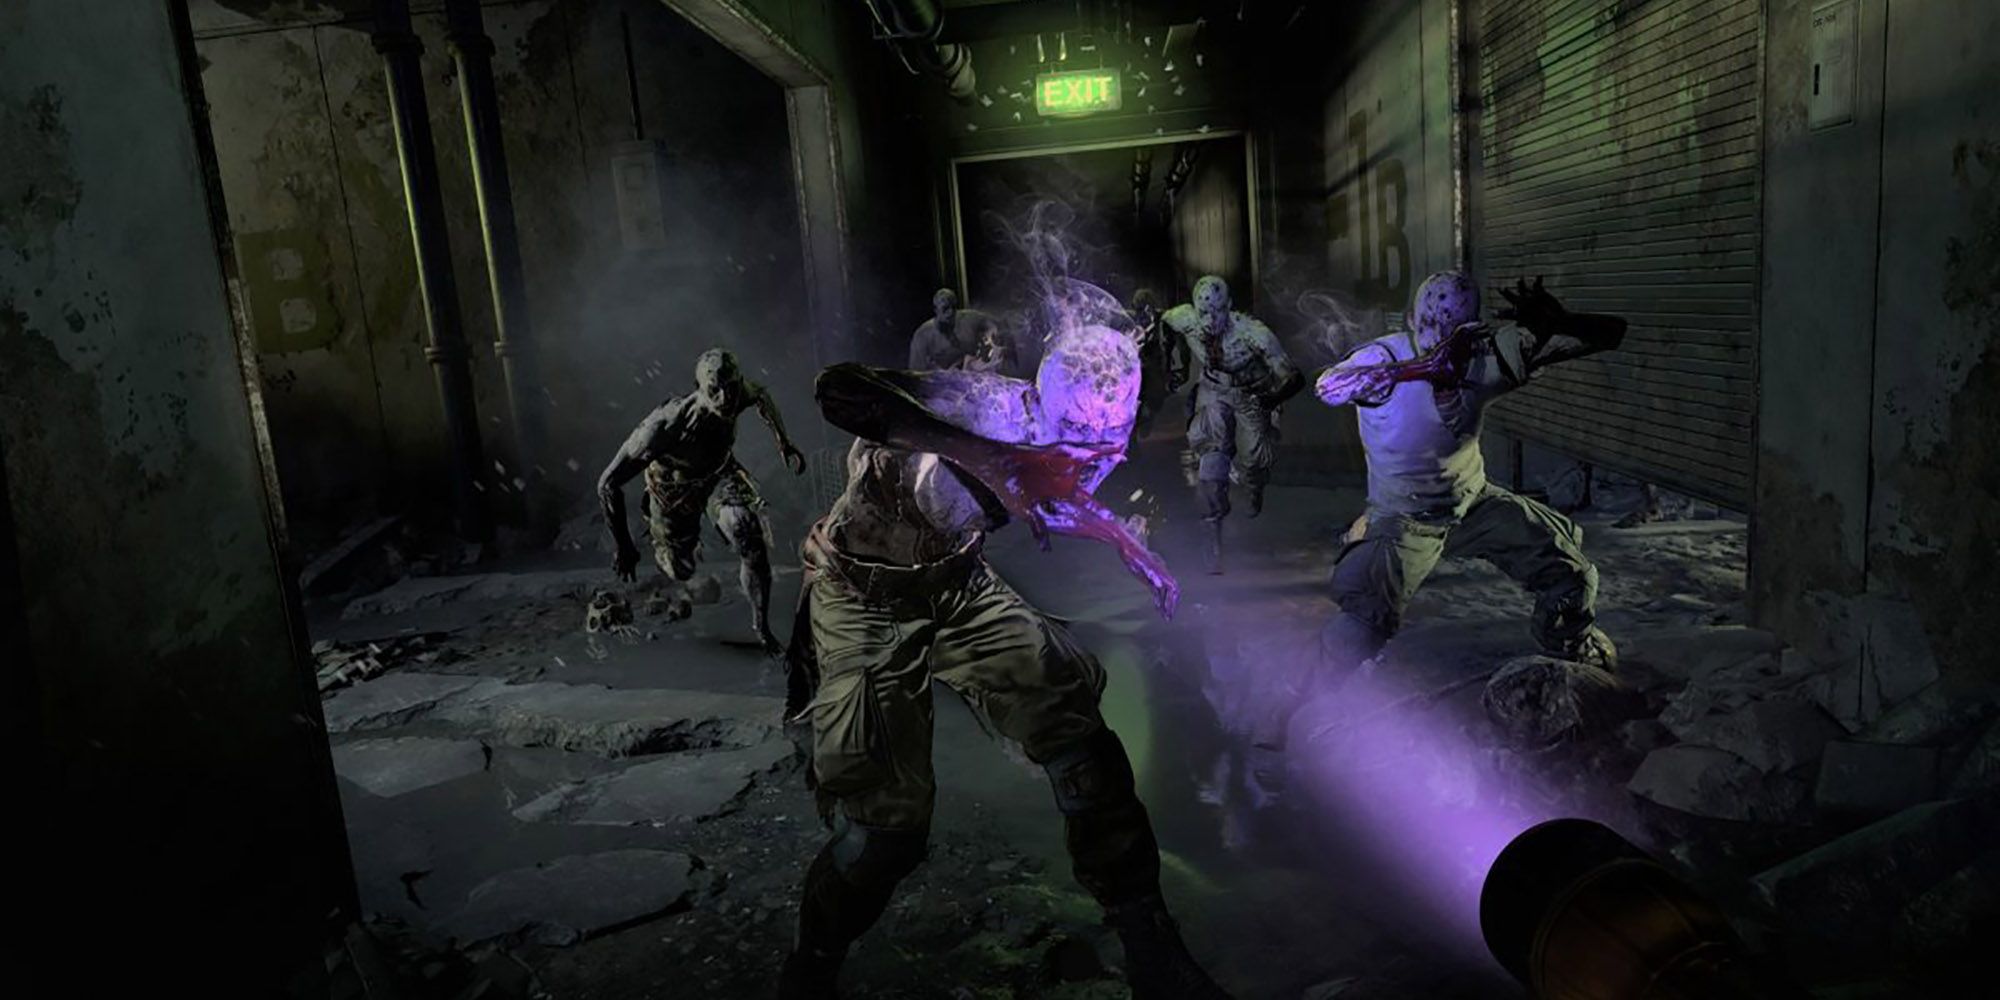 Dying Light's zombie horde